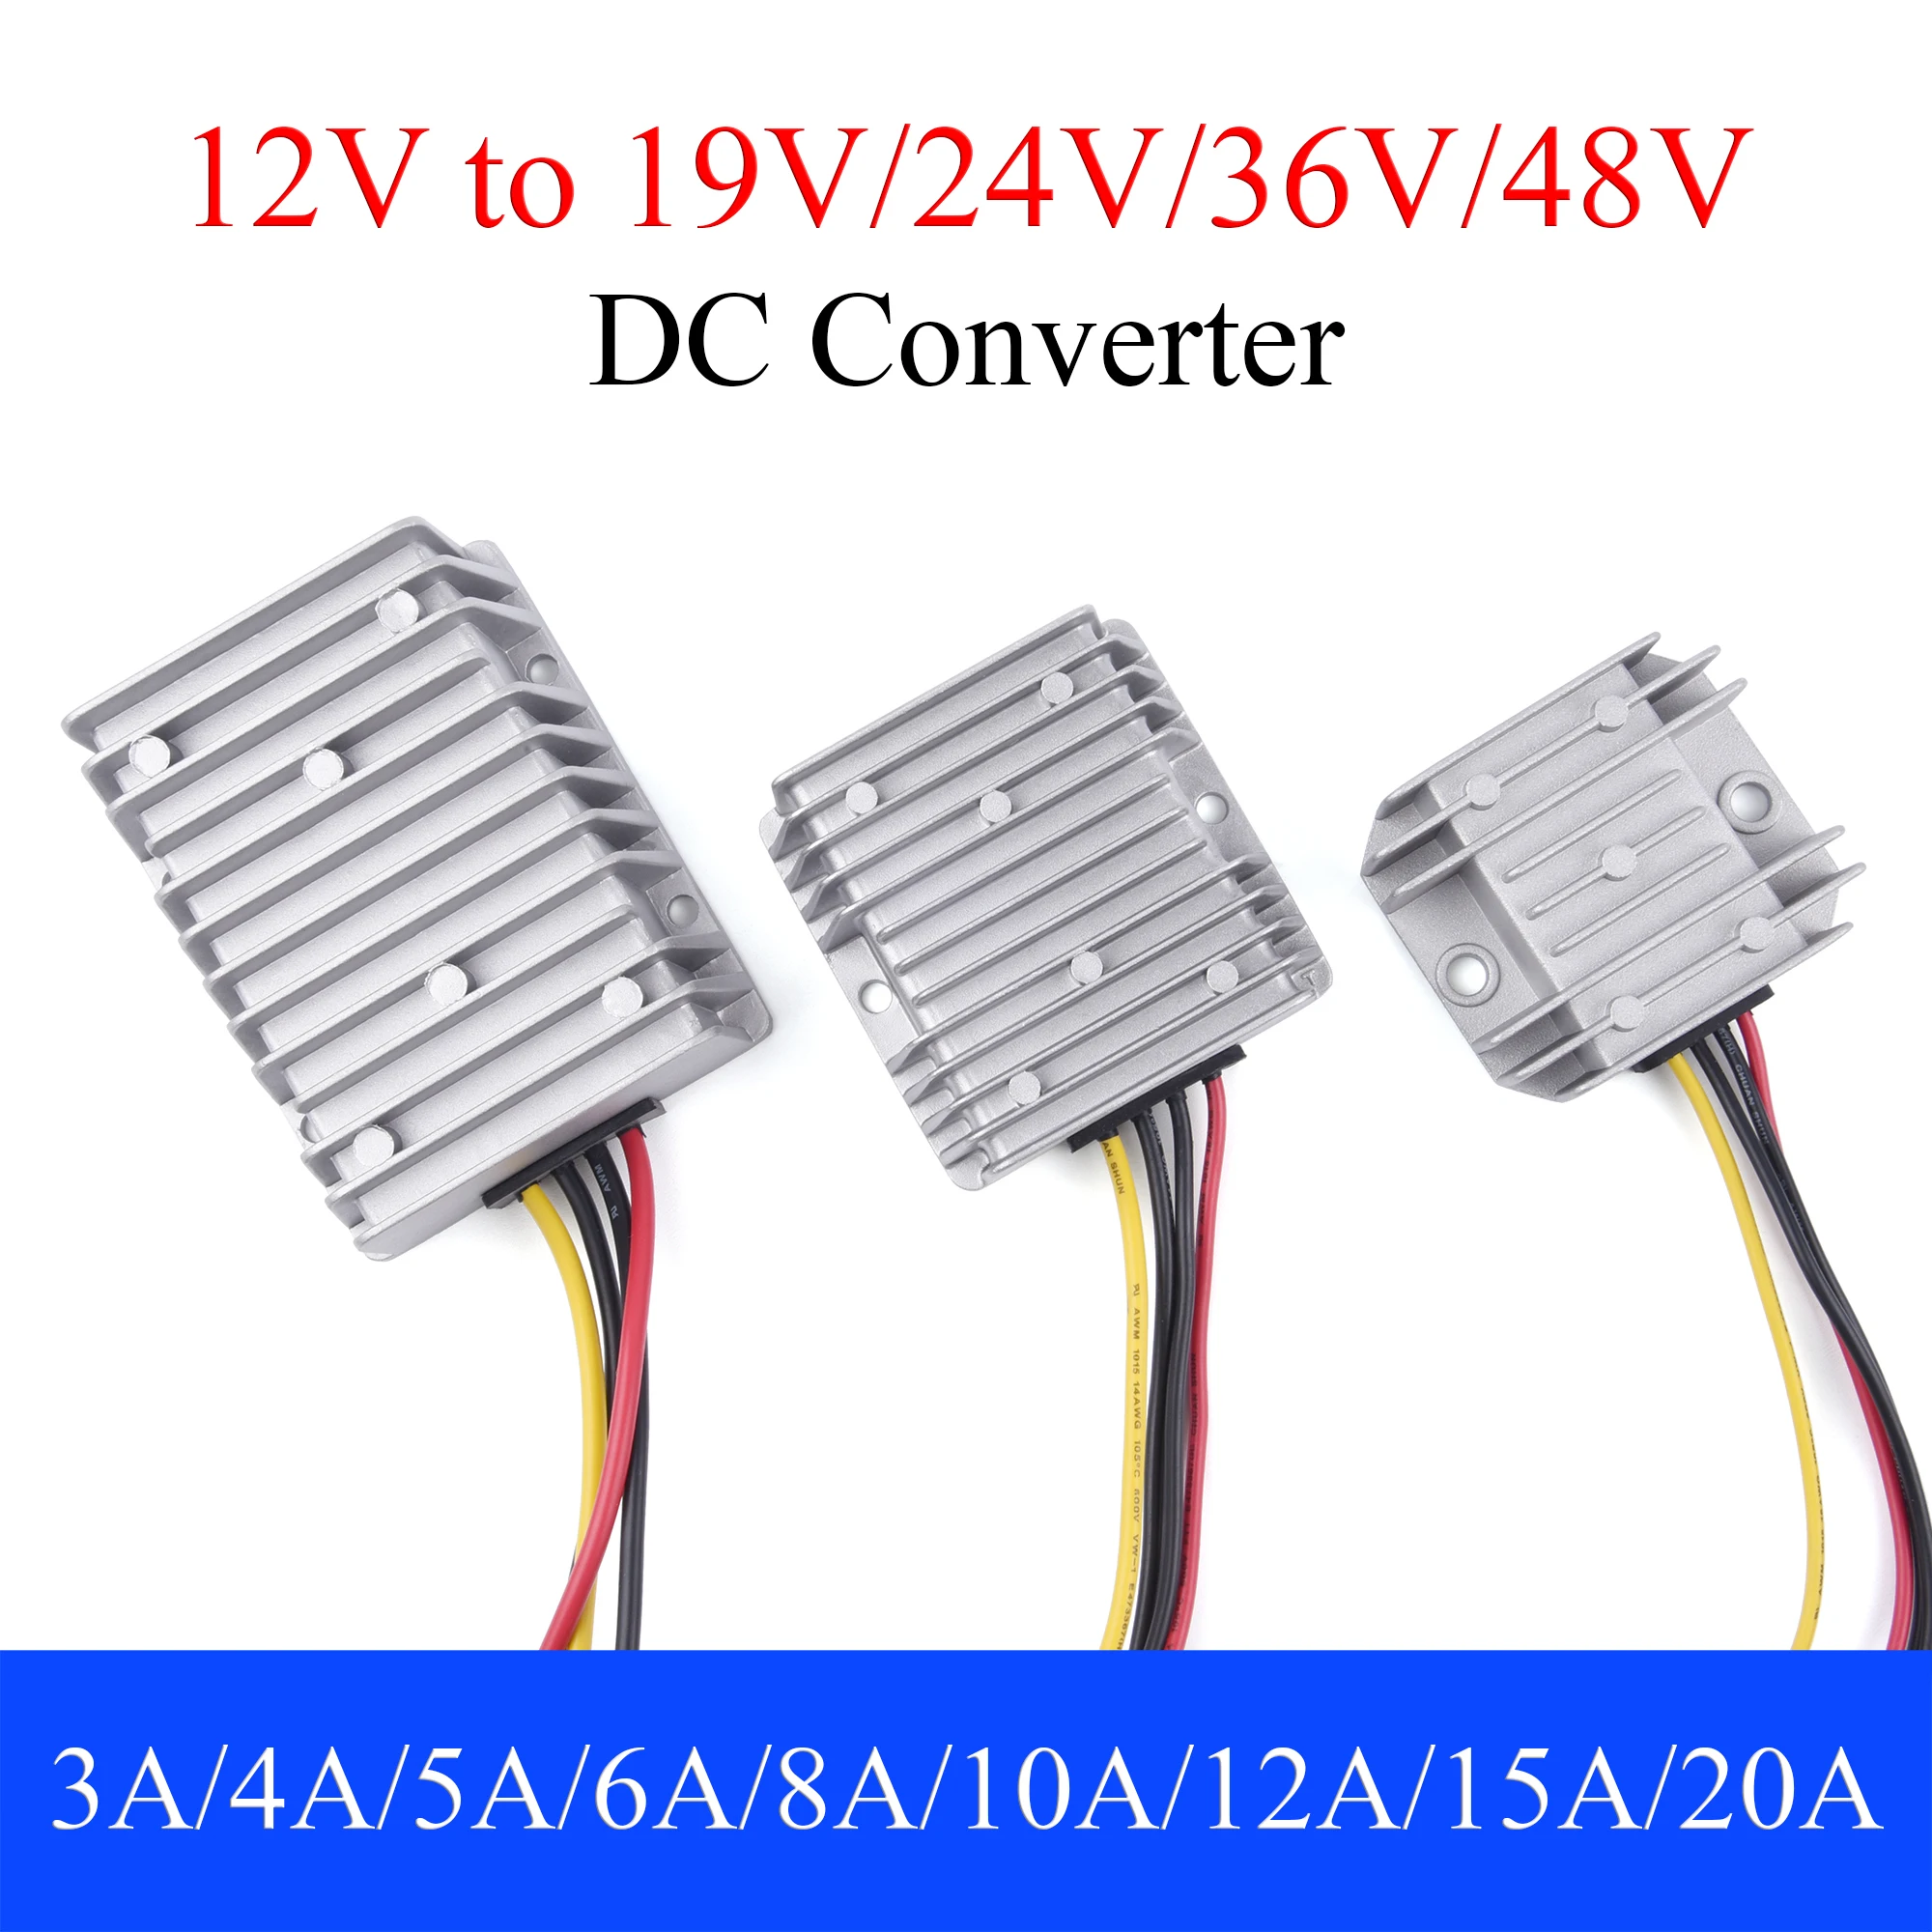 

DC 12V to 19V/24V/36V/48V Power Converter 3A 5A 8A 10A 12A 15A 20A Auto Boost Regulator Step-Up Voltage Supply Module For Car